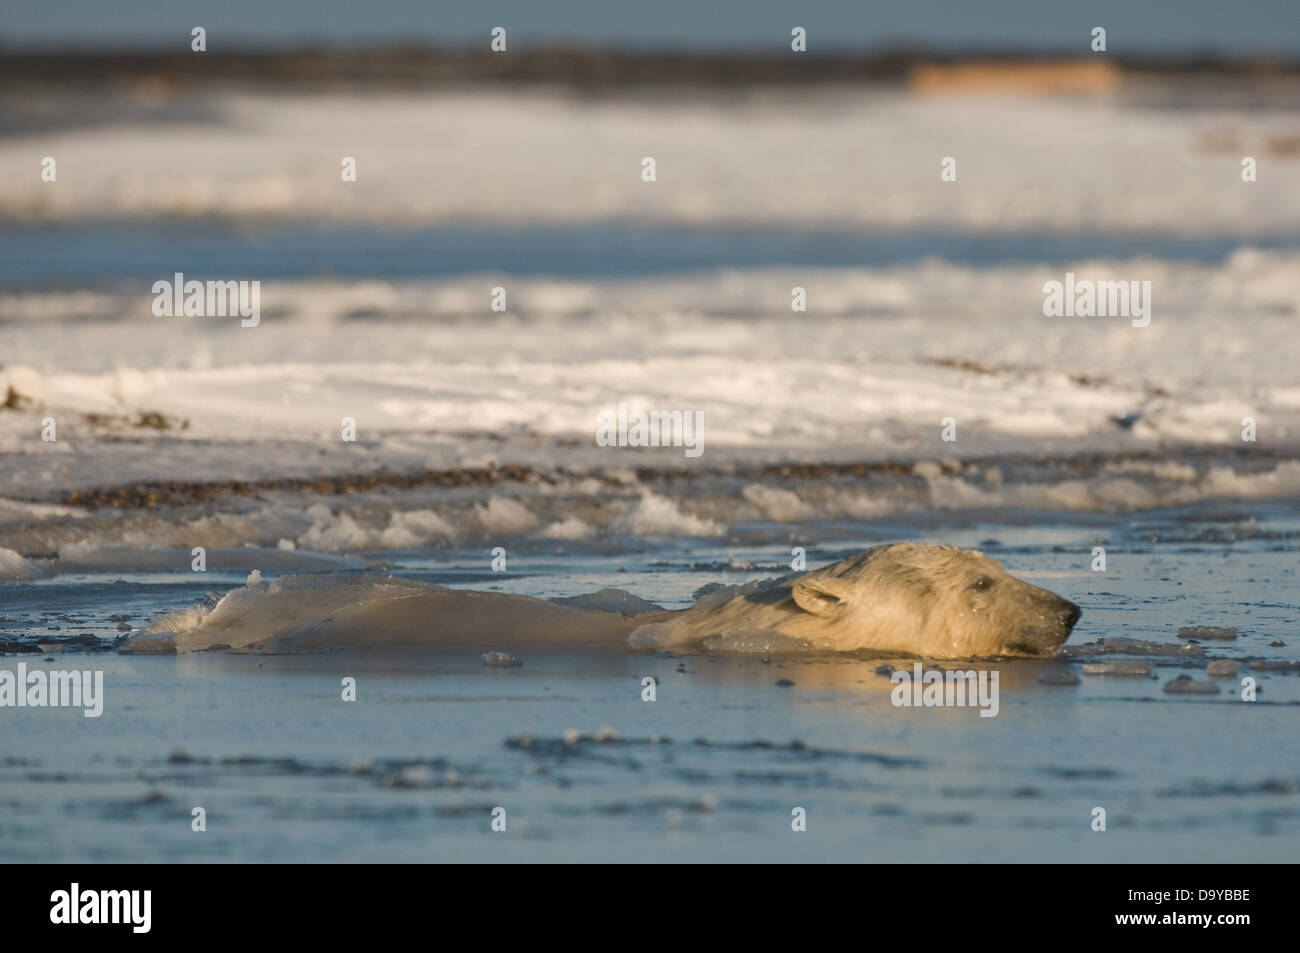 USA Alaska Brooks Range Arctic National Wildlife Refuge Polar bear Ursus maritimus young bear swimming in slushy icy water Stock Photo